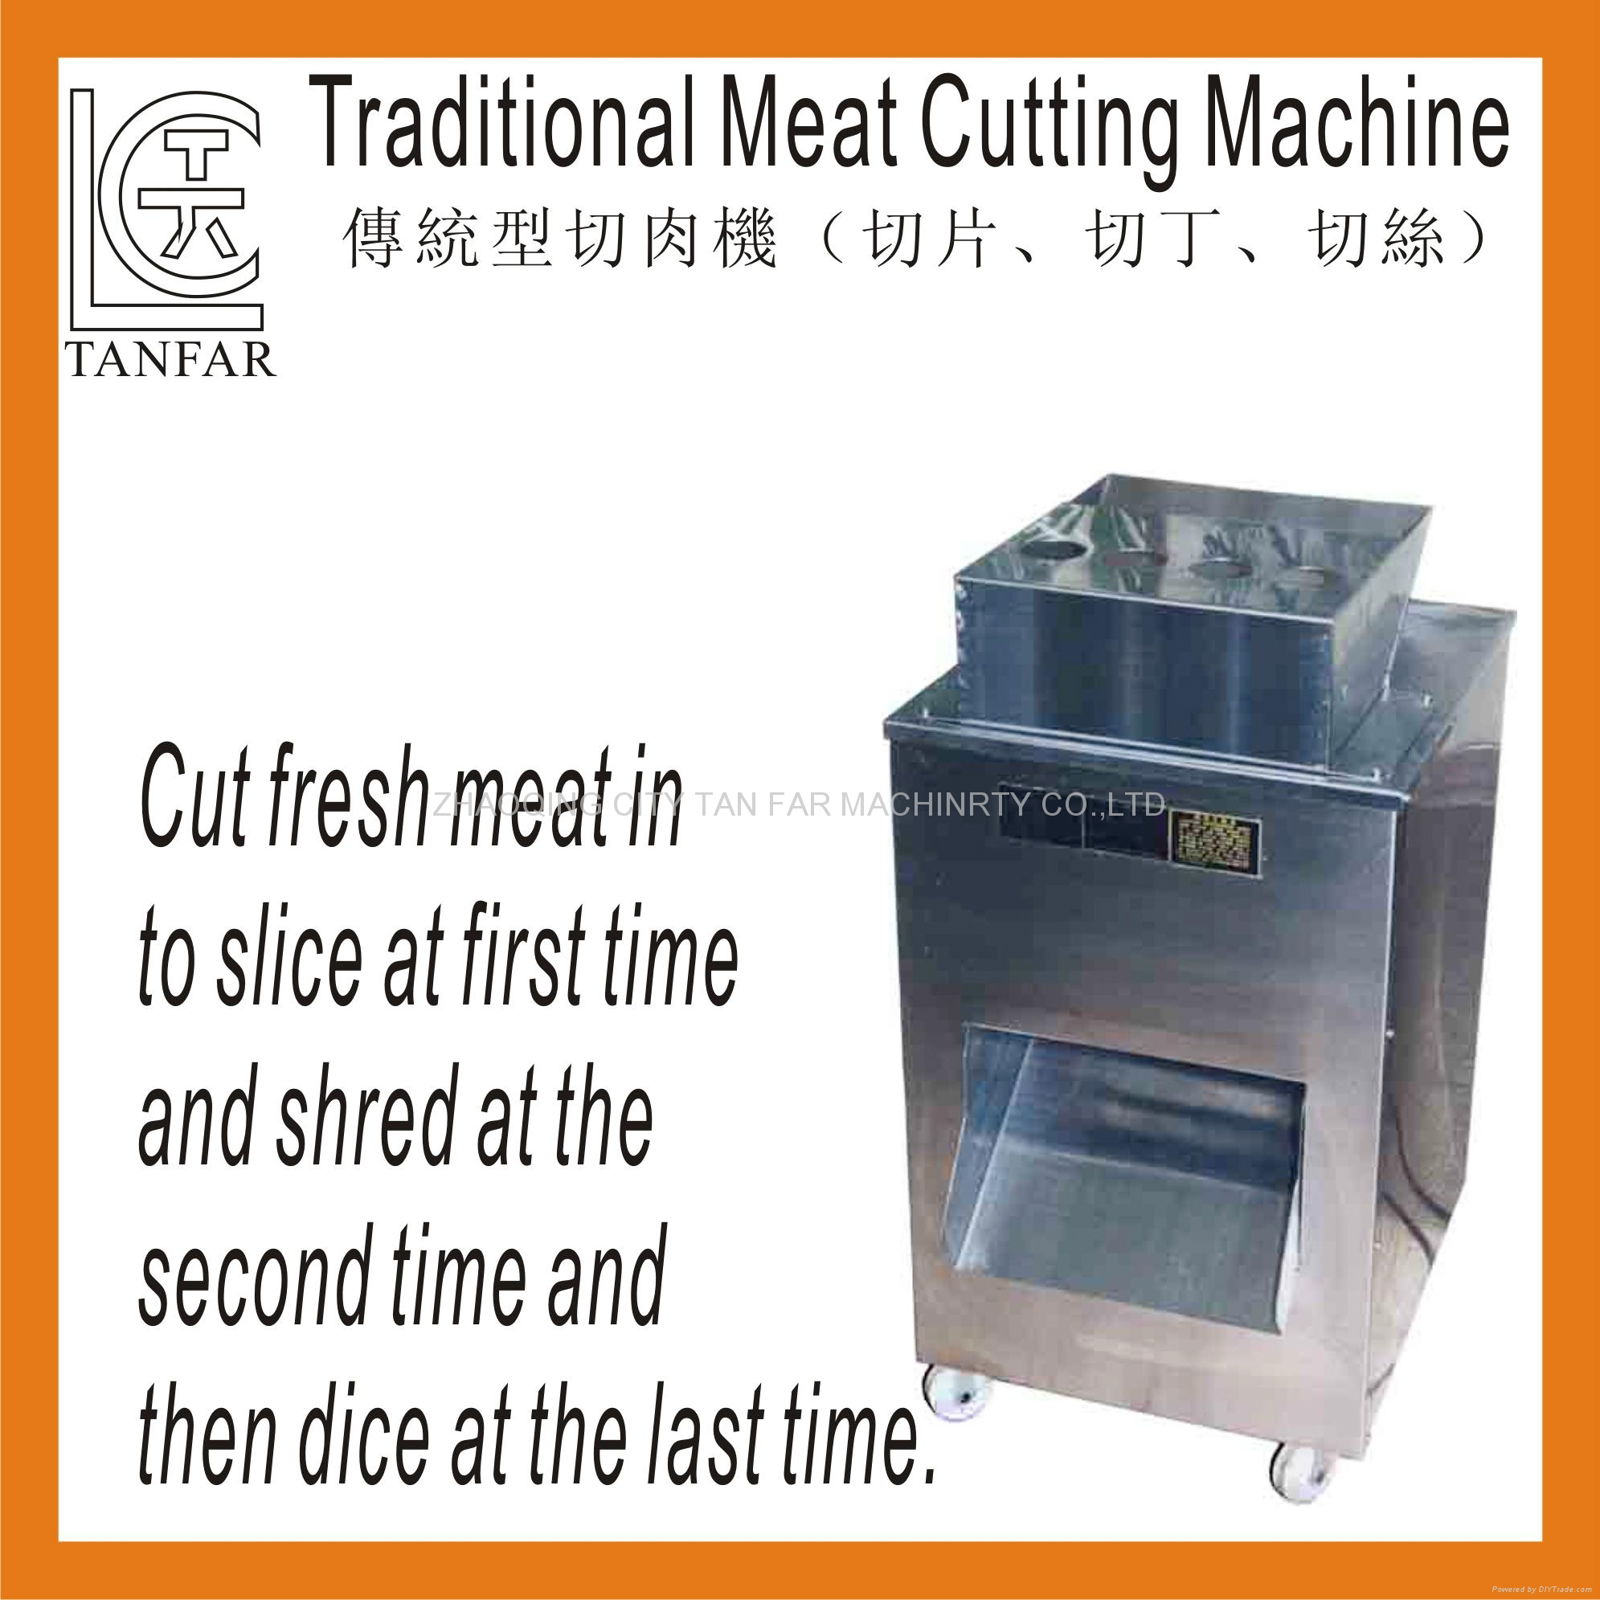 天發傳統型切肉機slicing/shredding/dicing